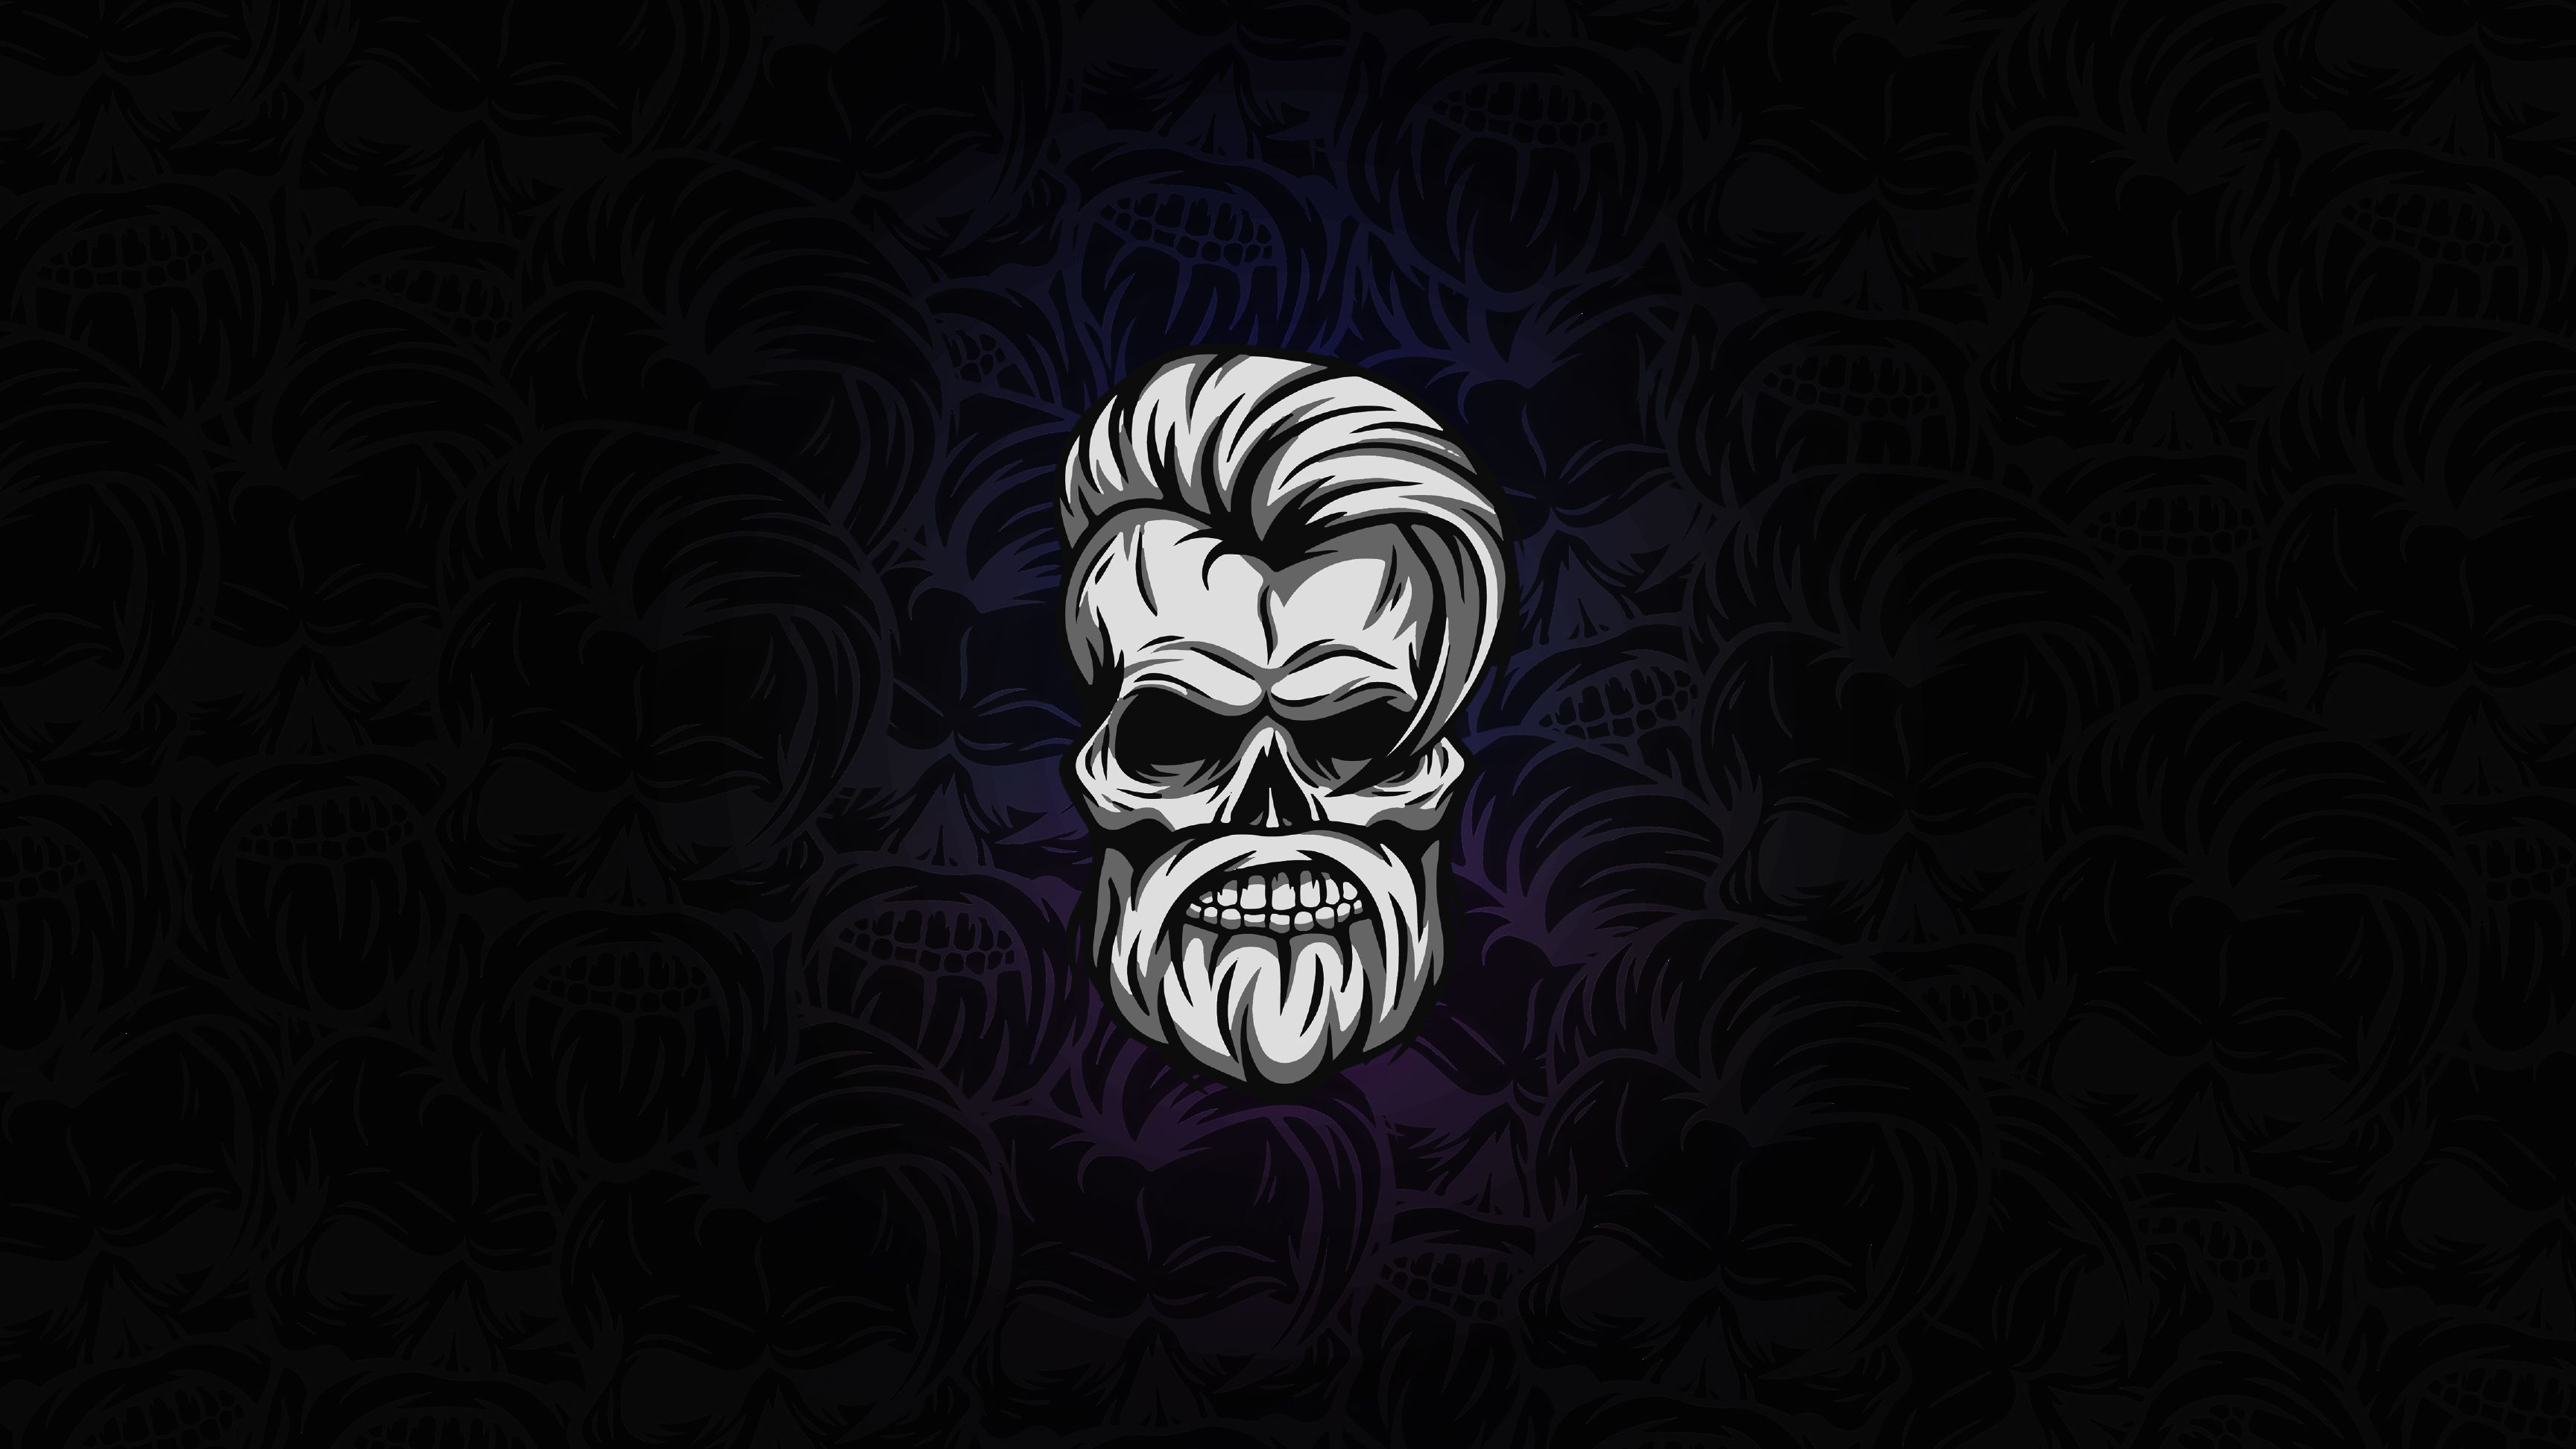 Beard Skull Dark 4k, HD Artist, 4k Wallpaper, Image, Background